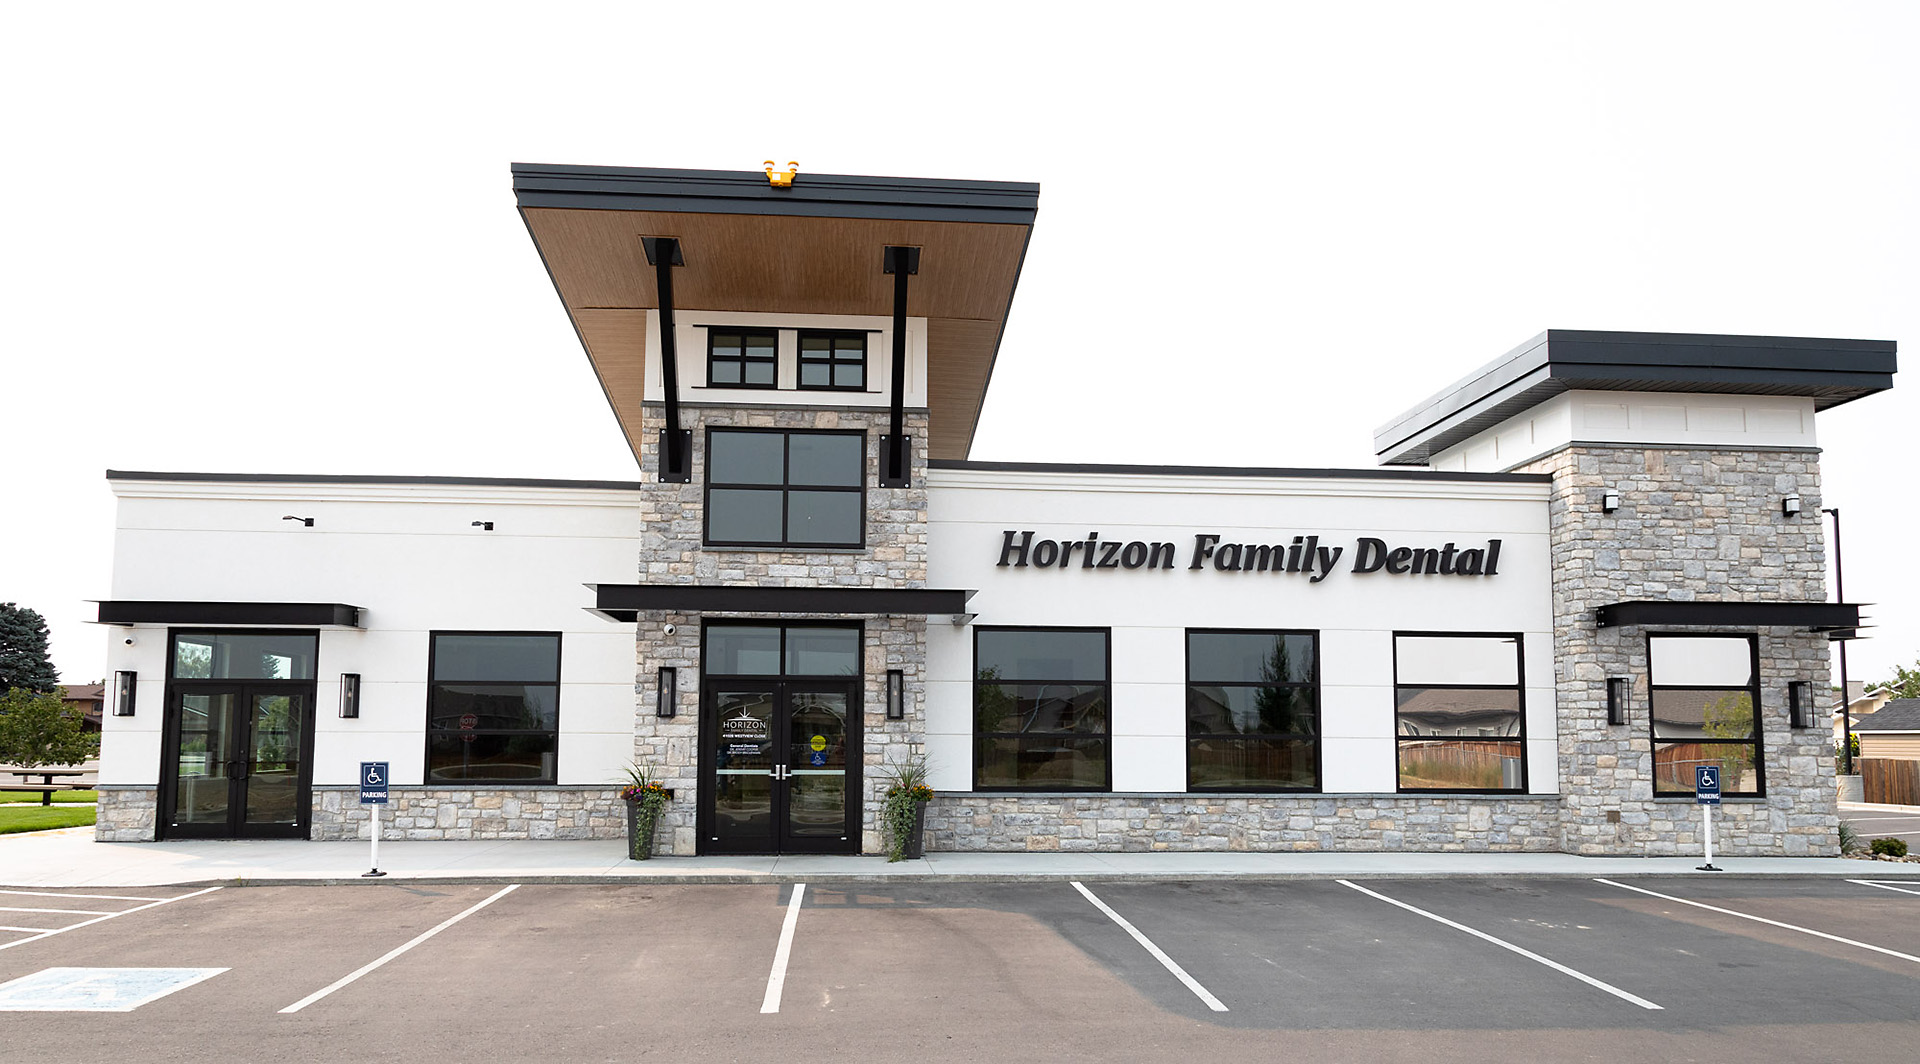 Exterior of Horizon Family Dental building 